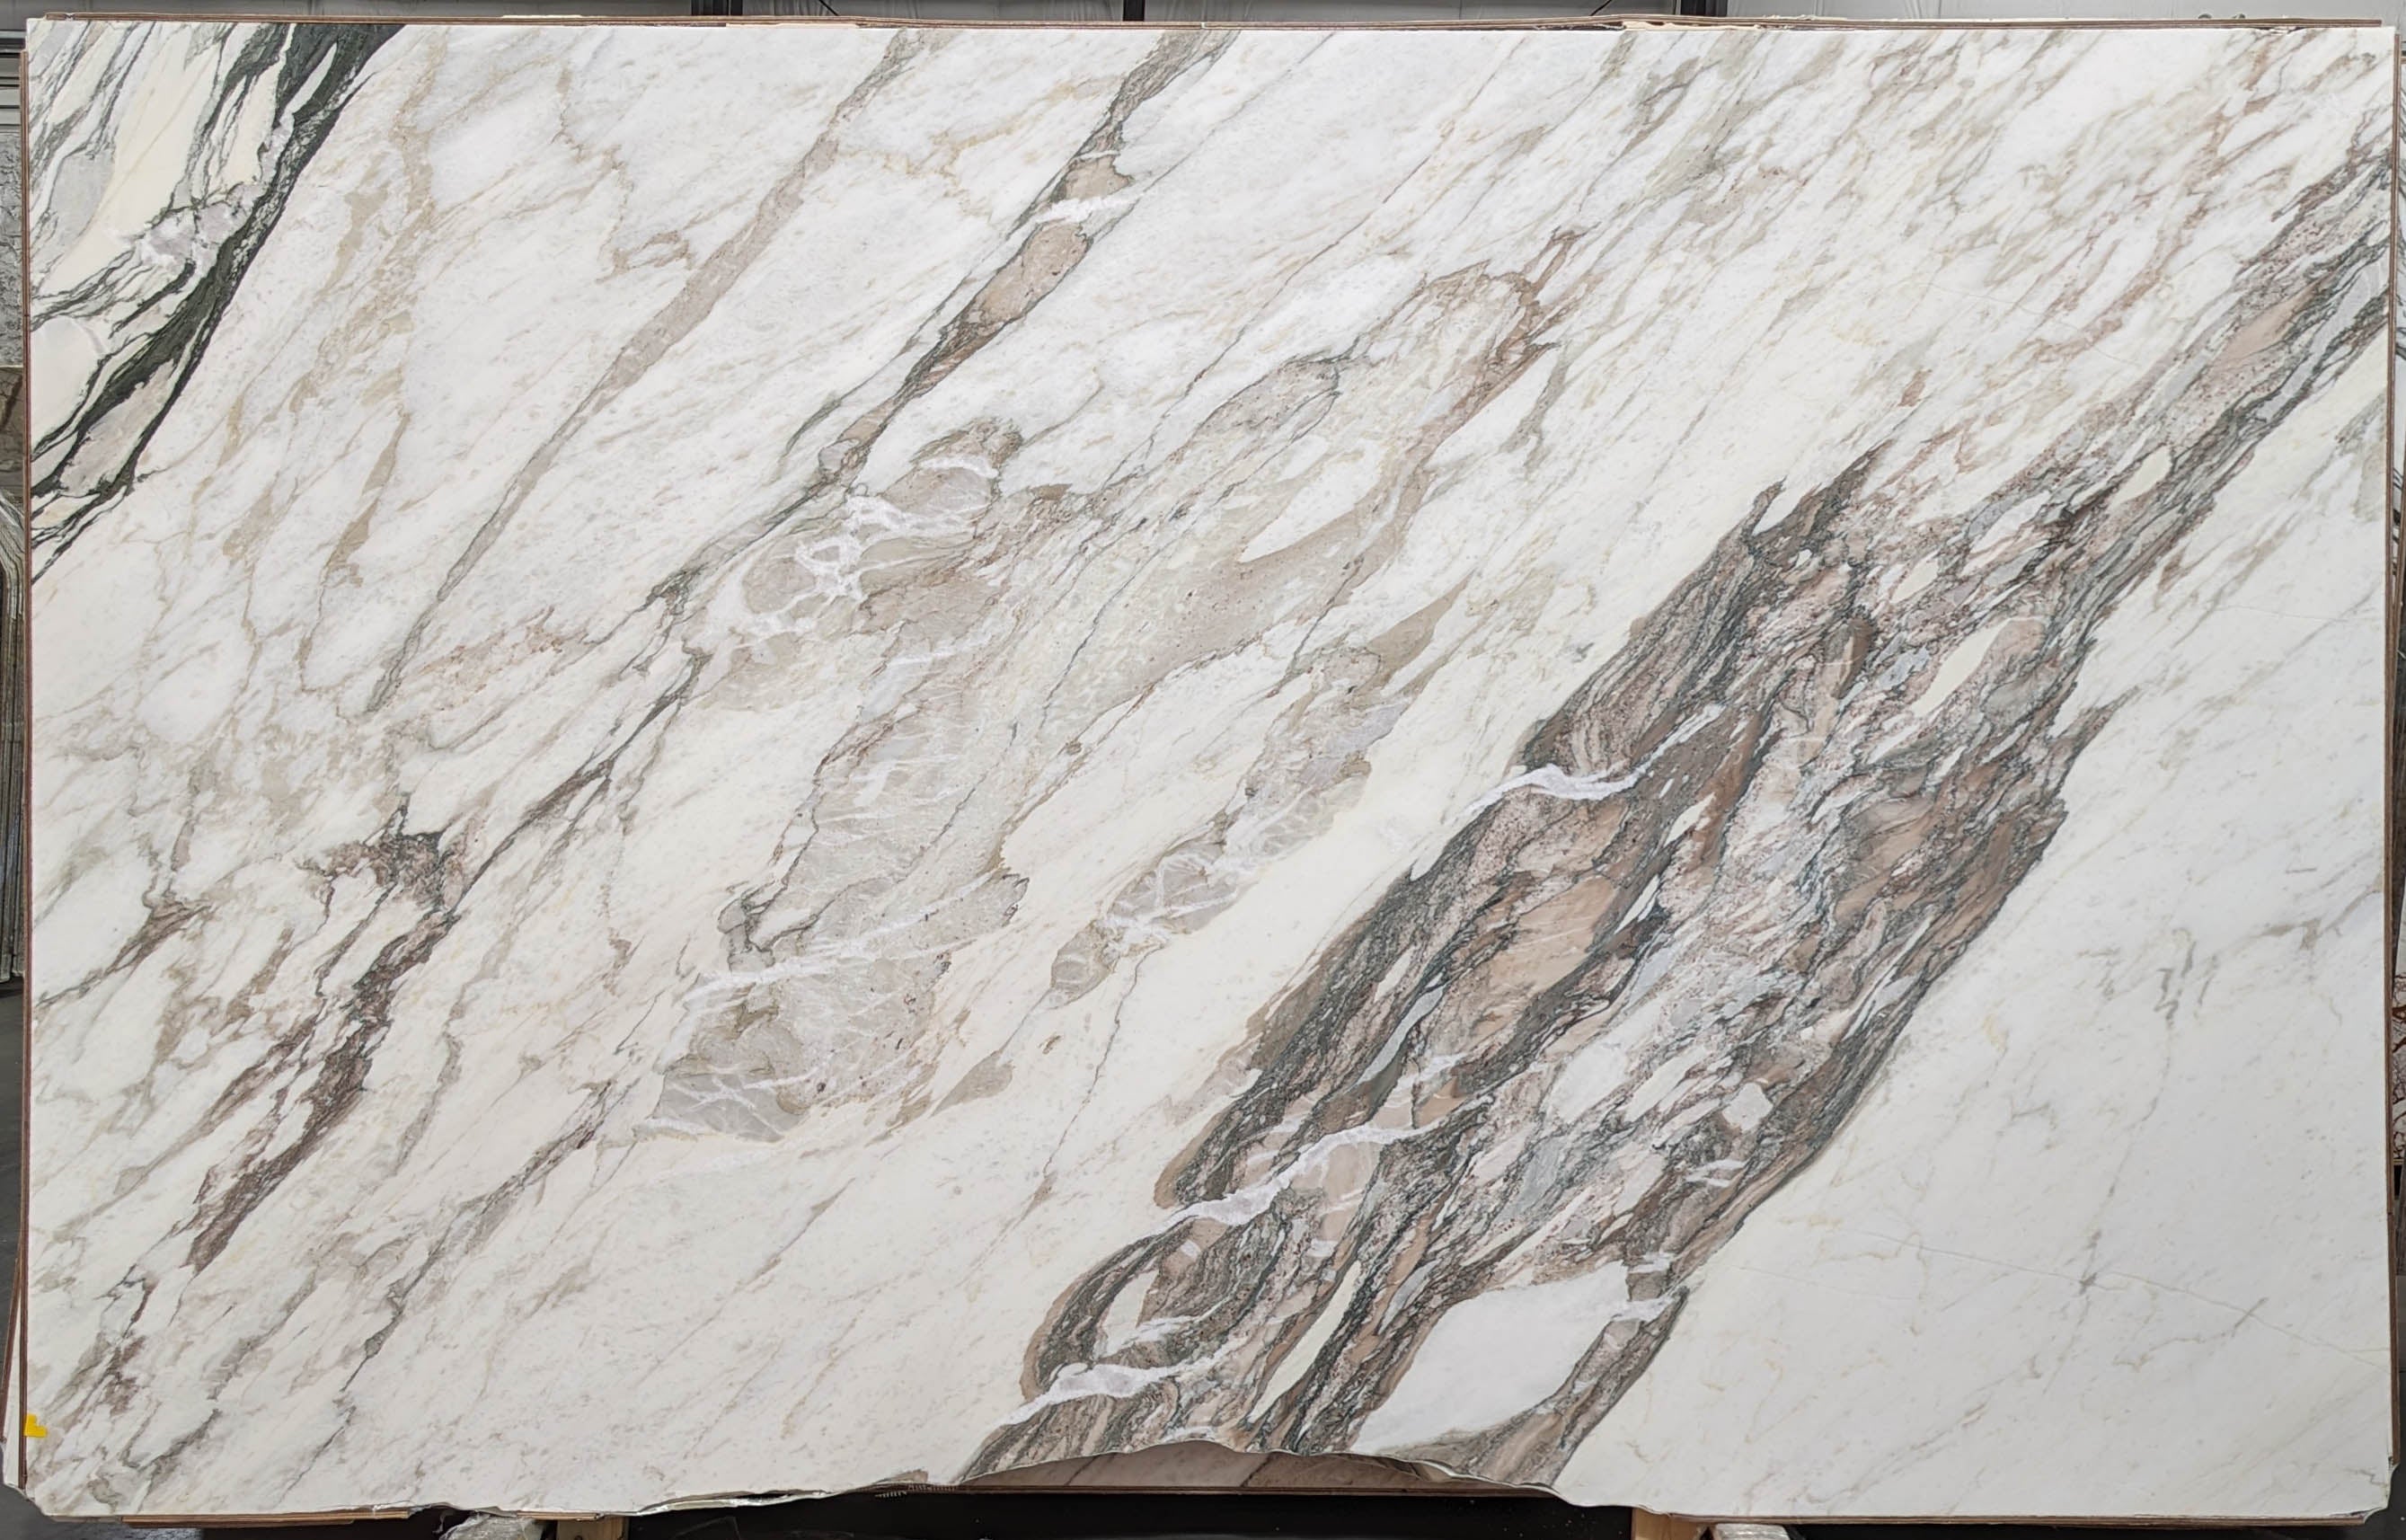  Calacatta Imperiale Marble Slab 3/4  Honed Stone - 4028#09 -  70x119 